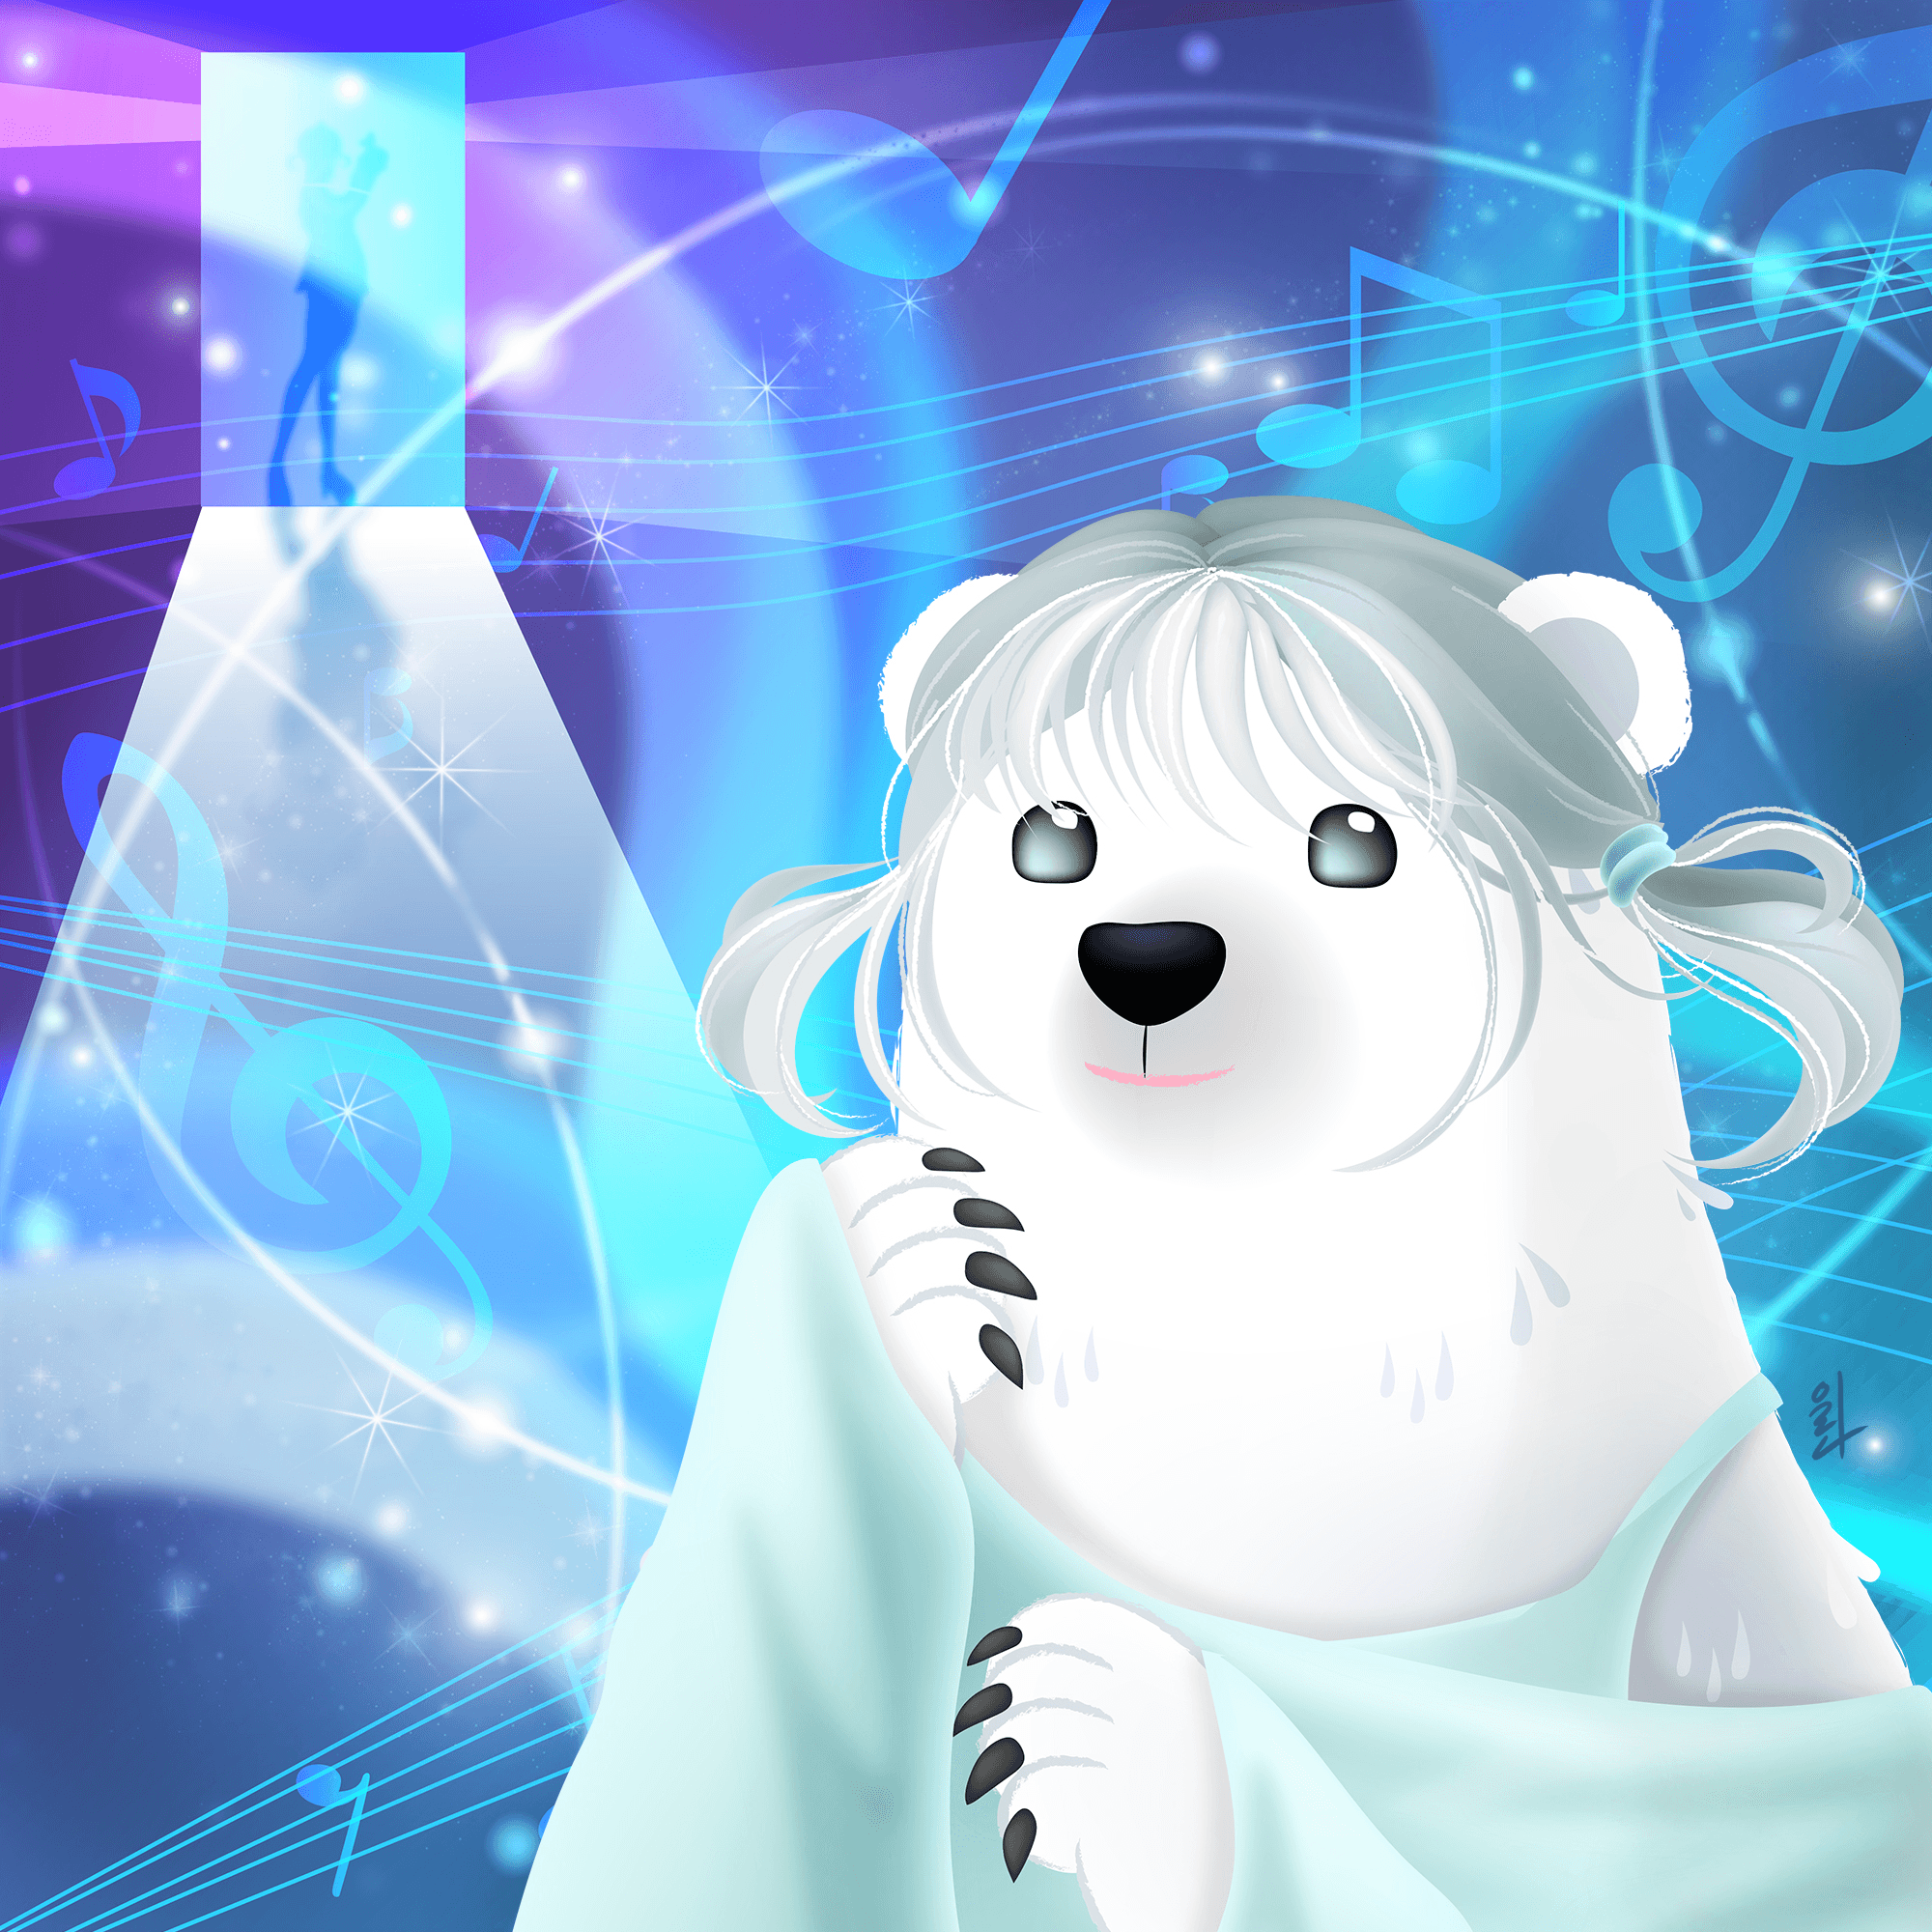 [LinaLee] reality beyond reality :Master Polar Bear 현실 너머의 현실:마스터 폴라베어